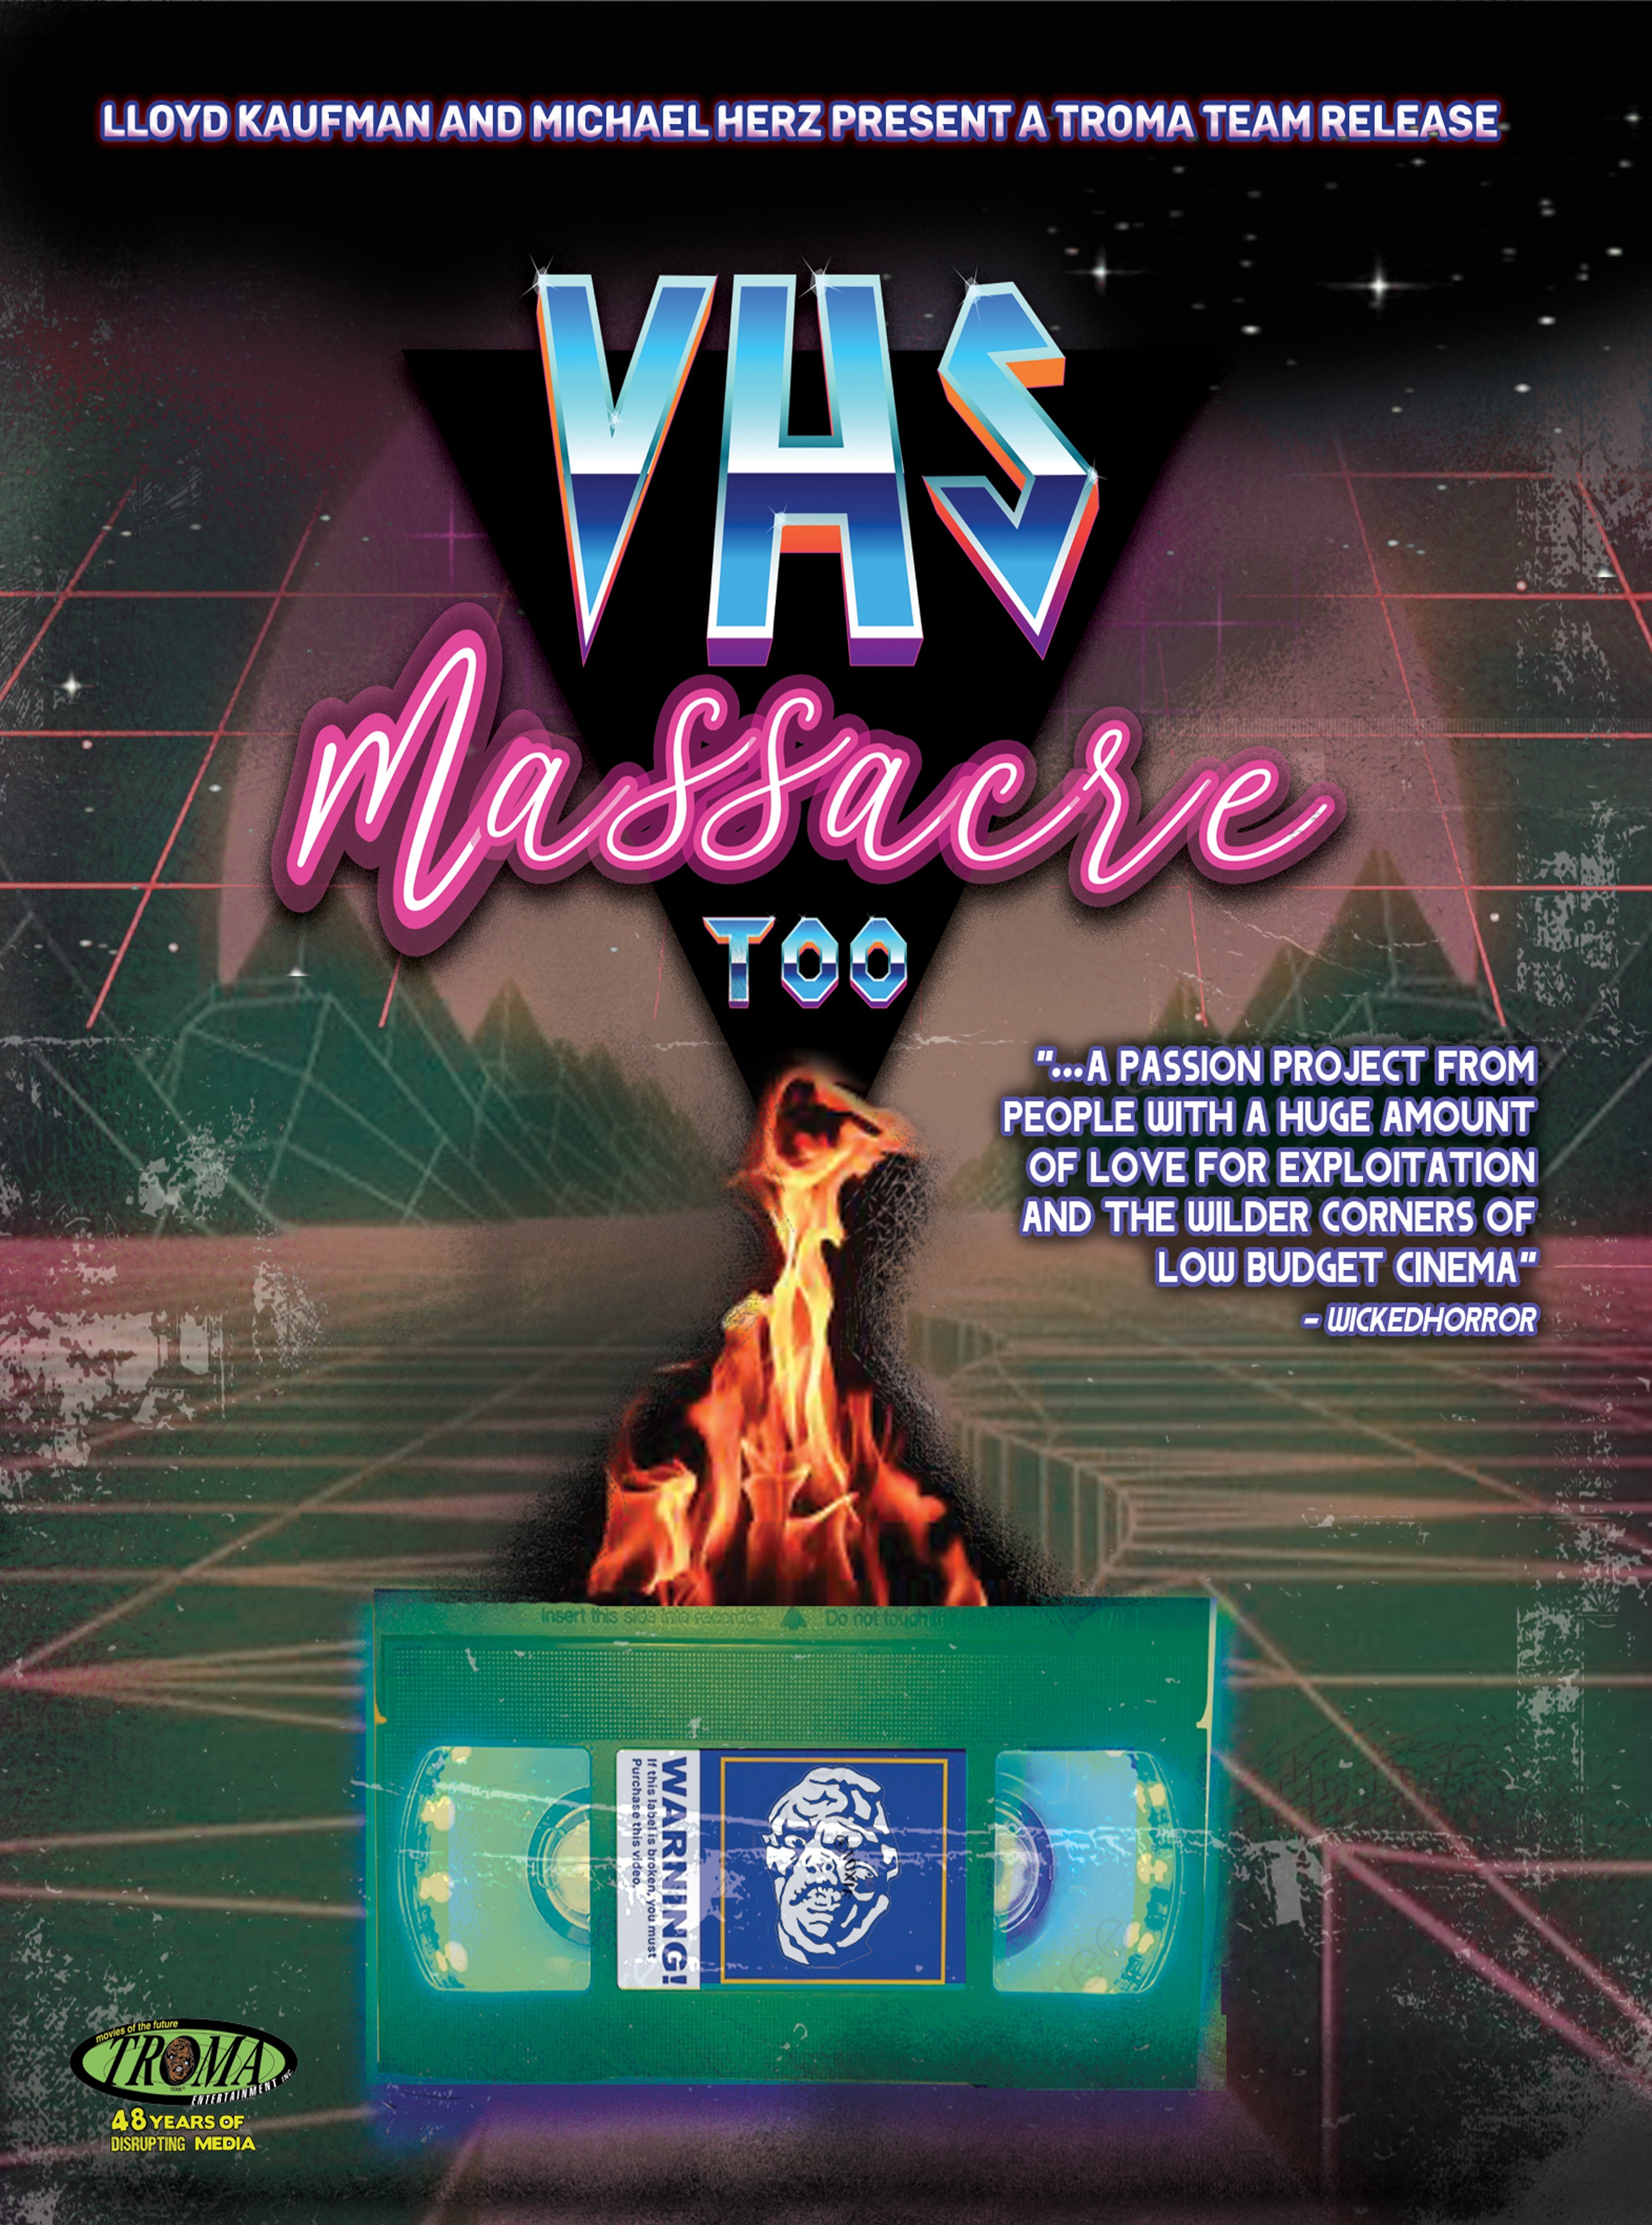 Vhs Massacre Too Blu-Ray Blu-Ray